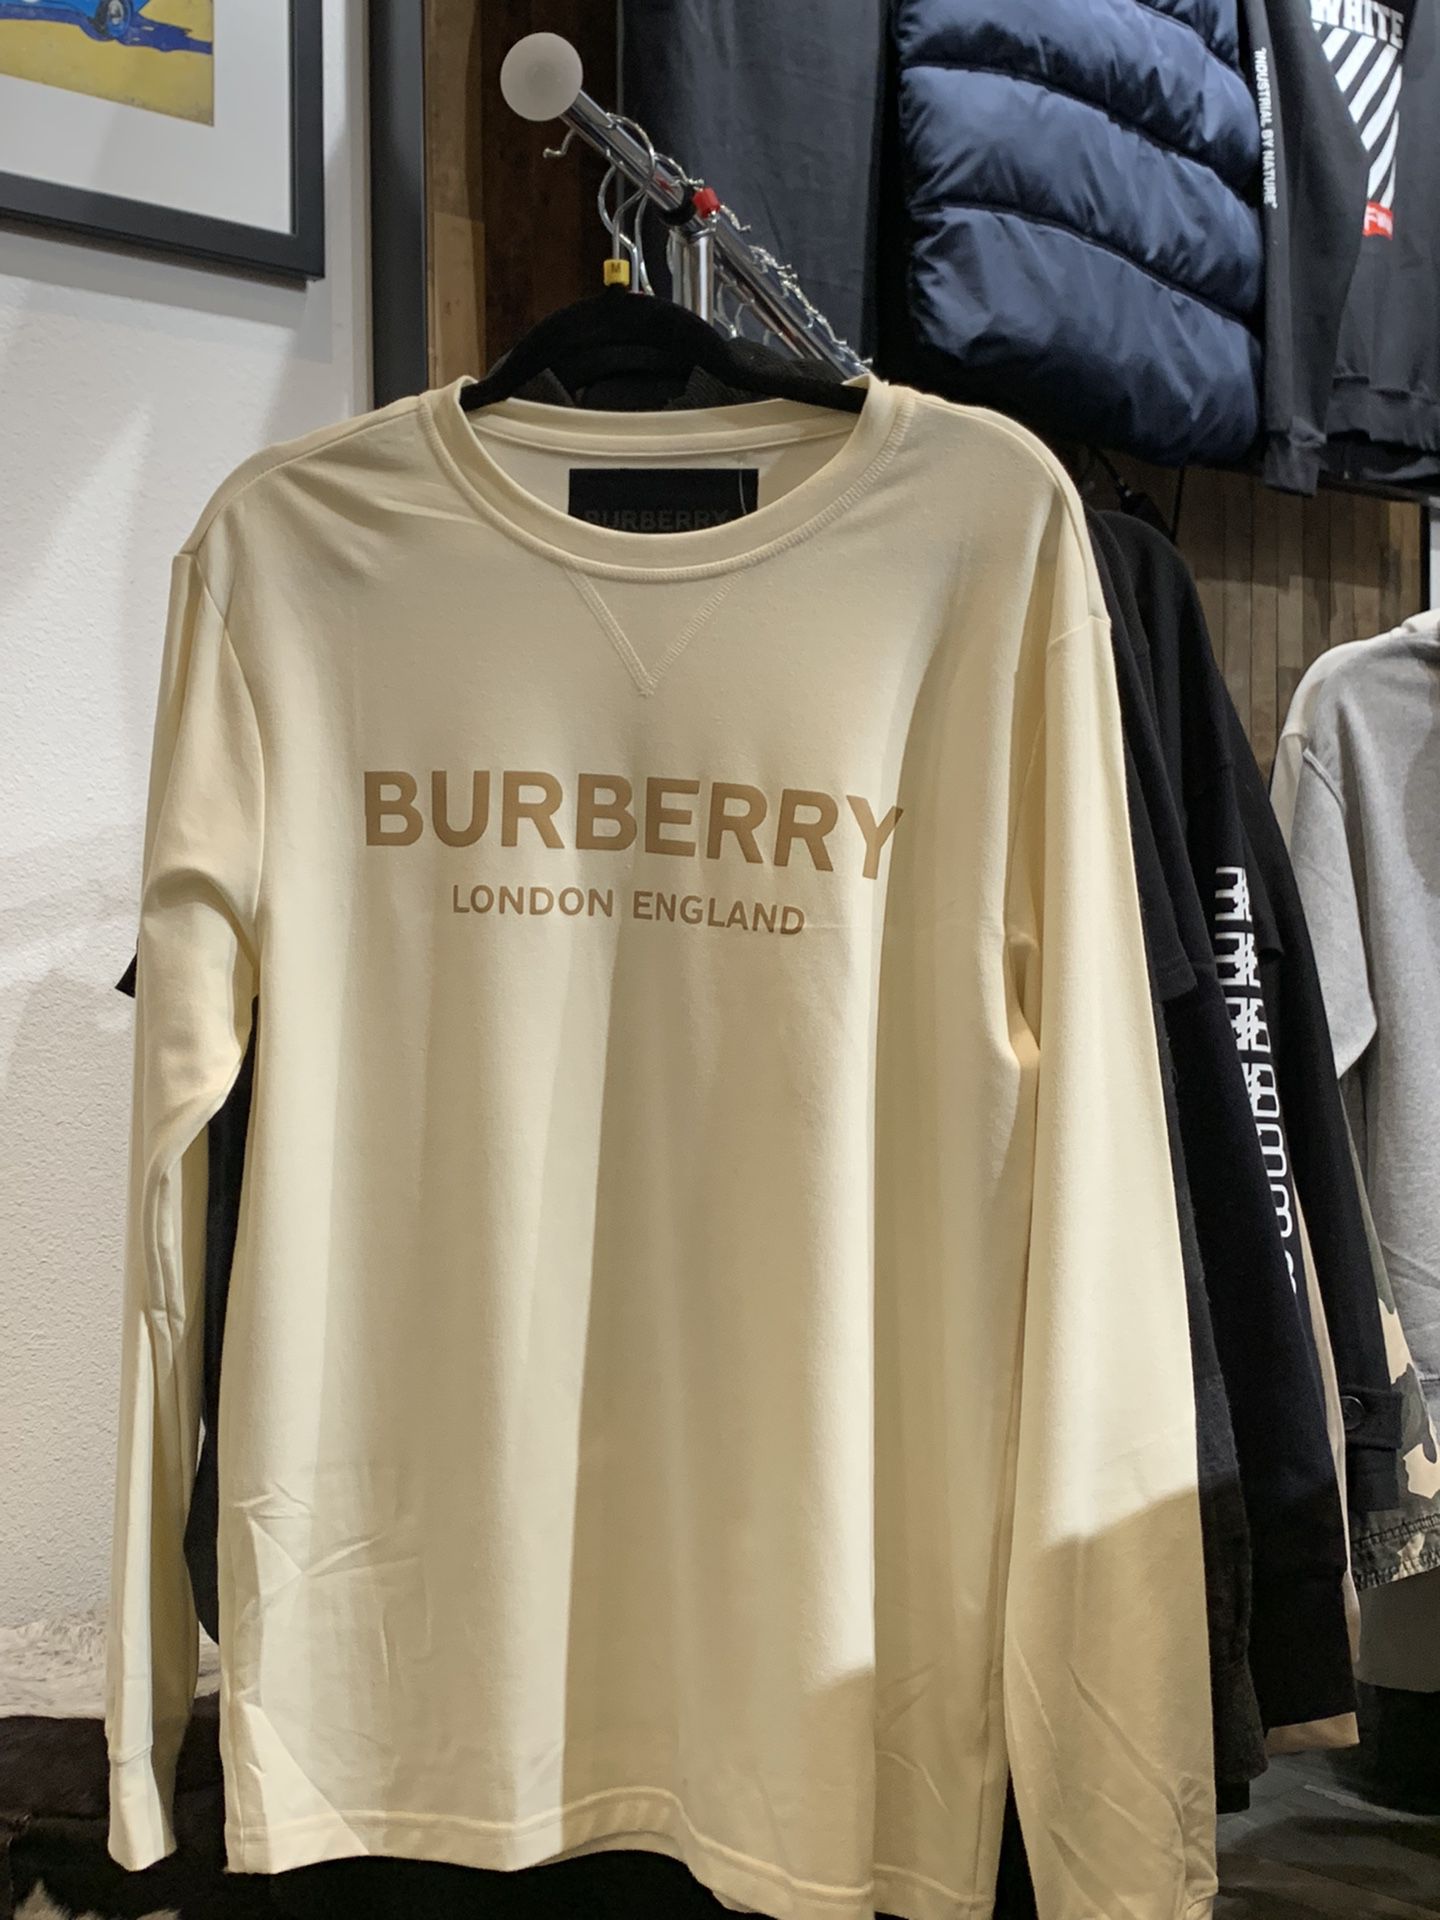 Burberry long sleeve shirt size medium